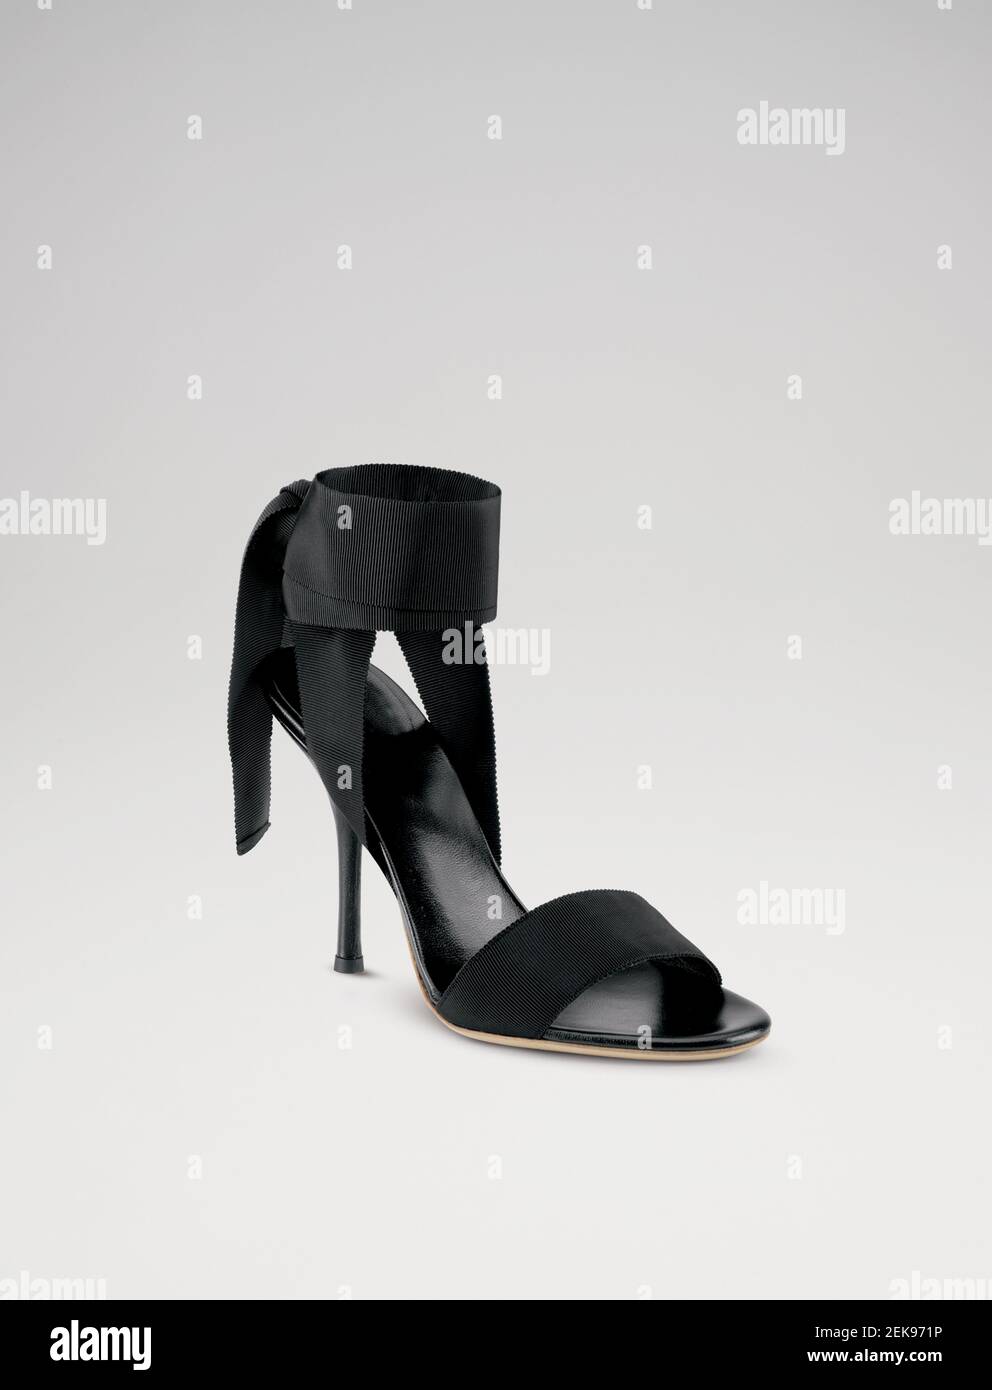 Fashion summer shoes for women close-up studio shoot. Stock Photo